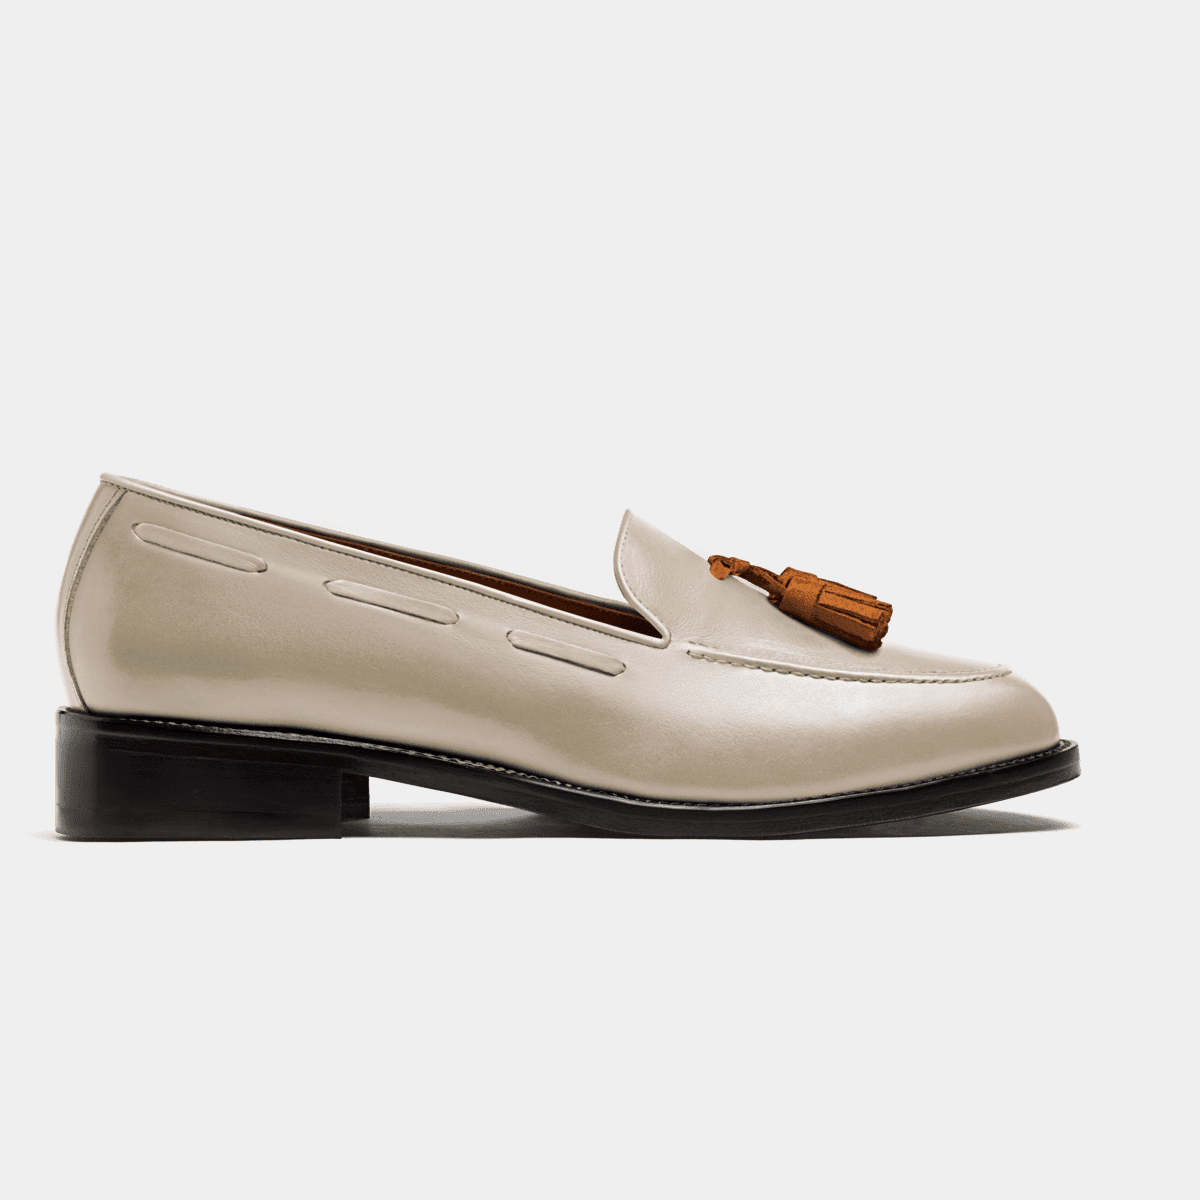 Tassel Loafer - white leather $195 | Sumissura